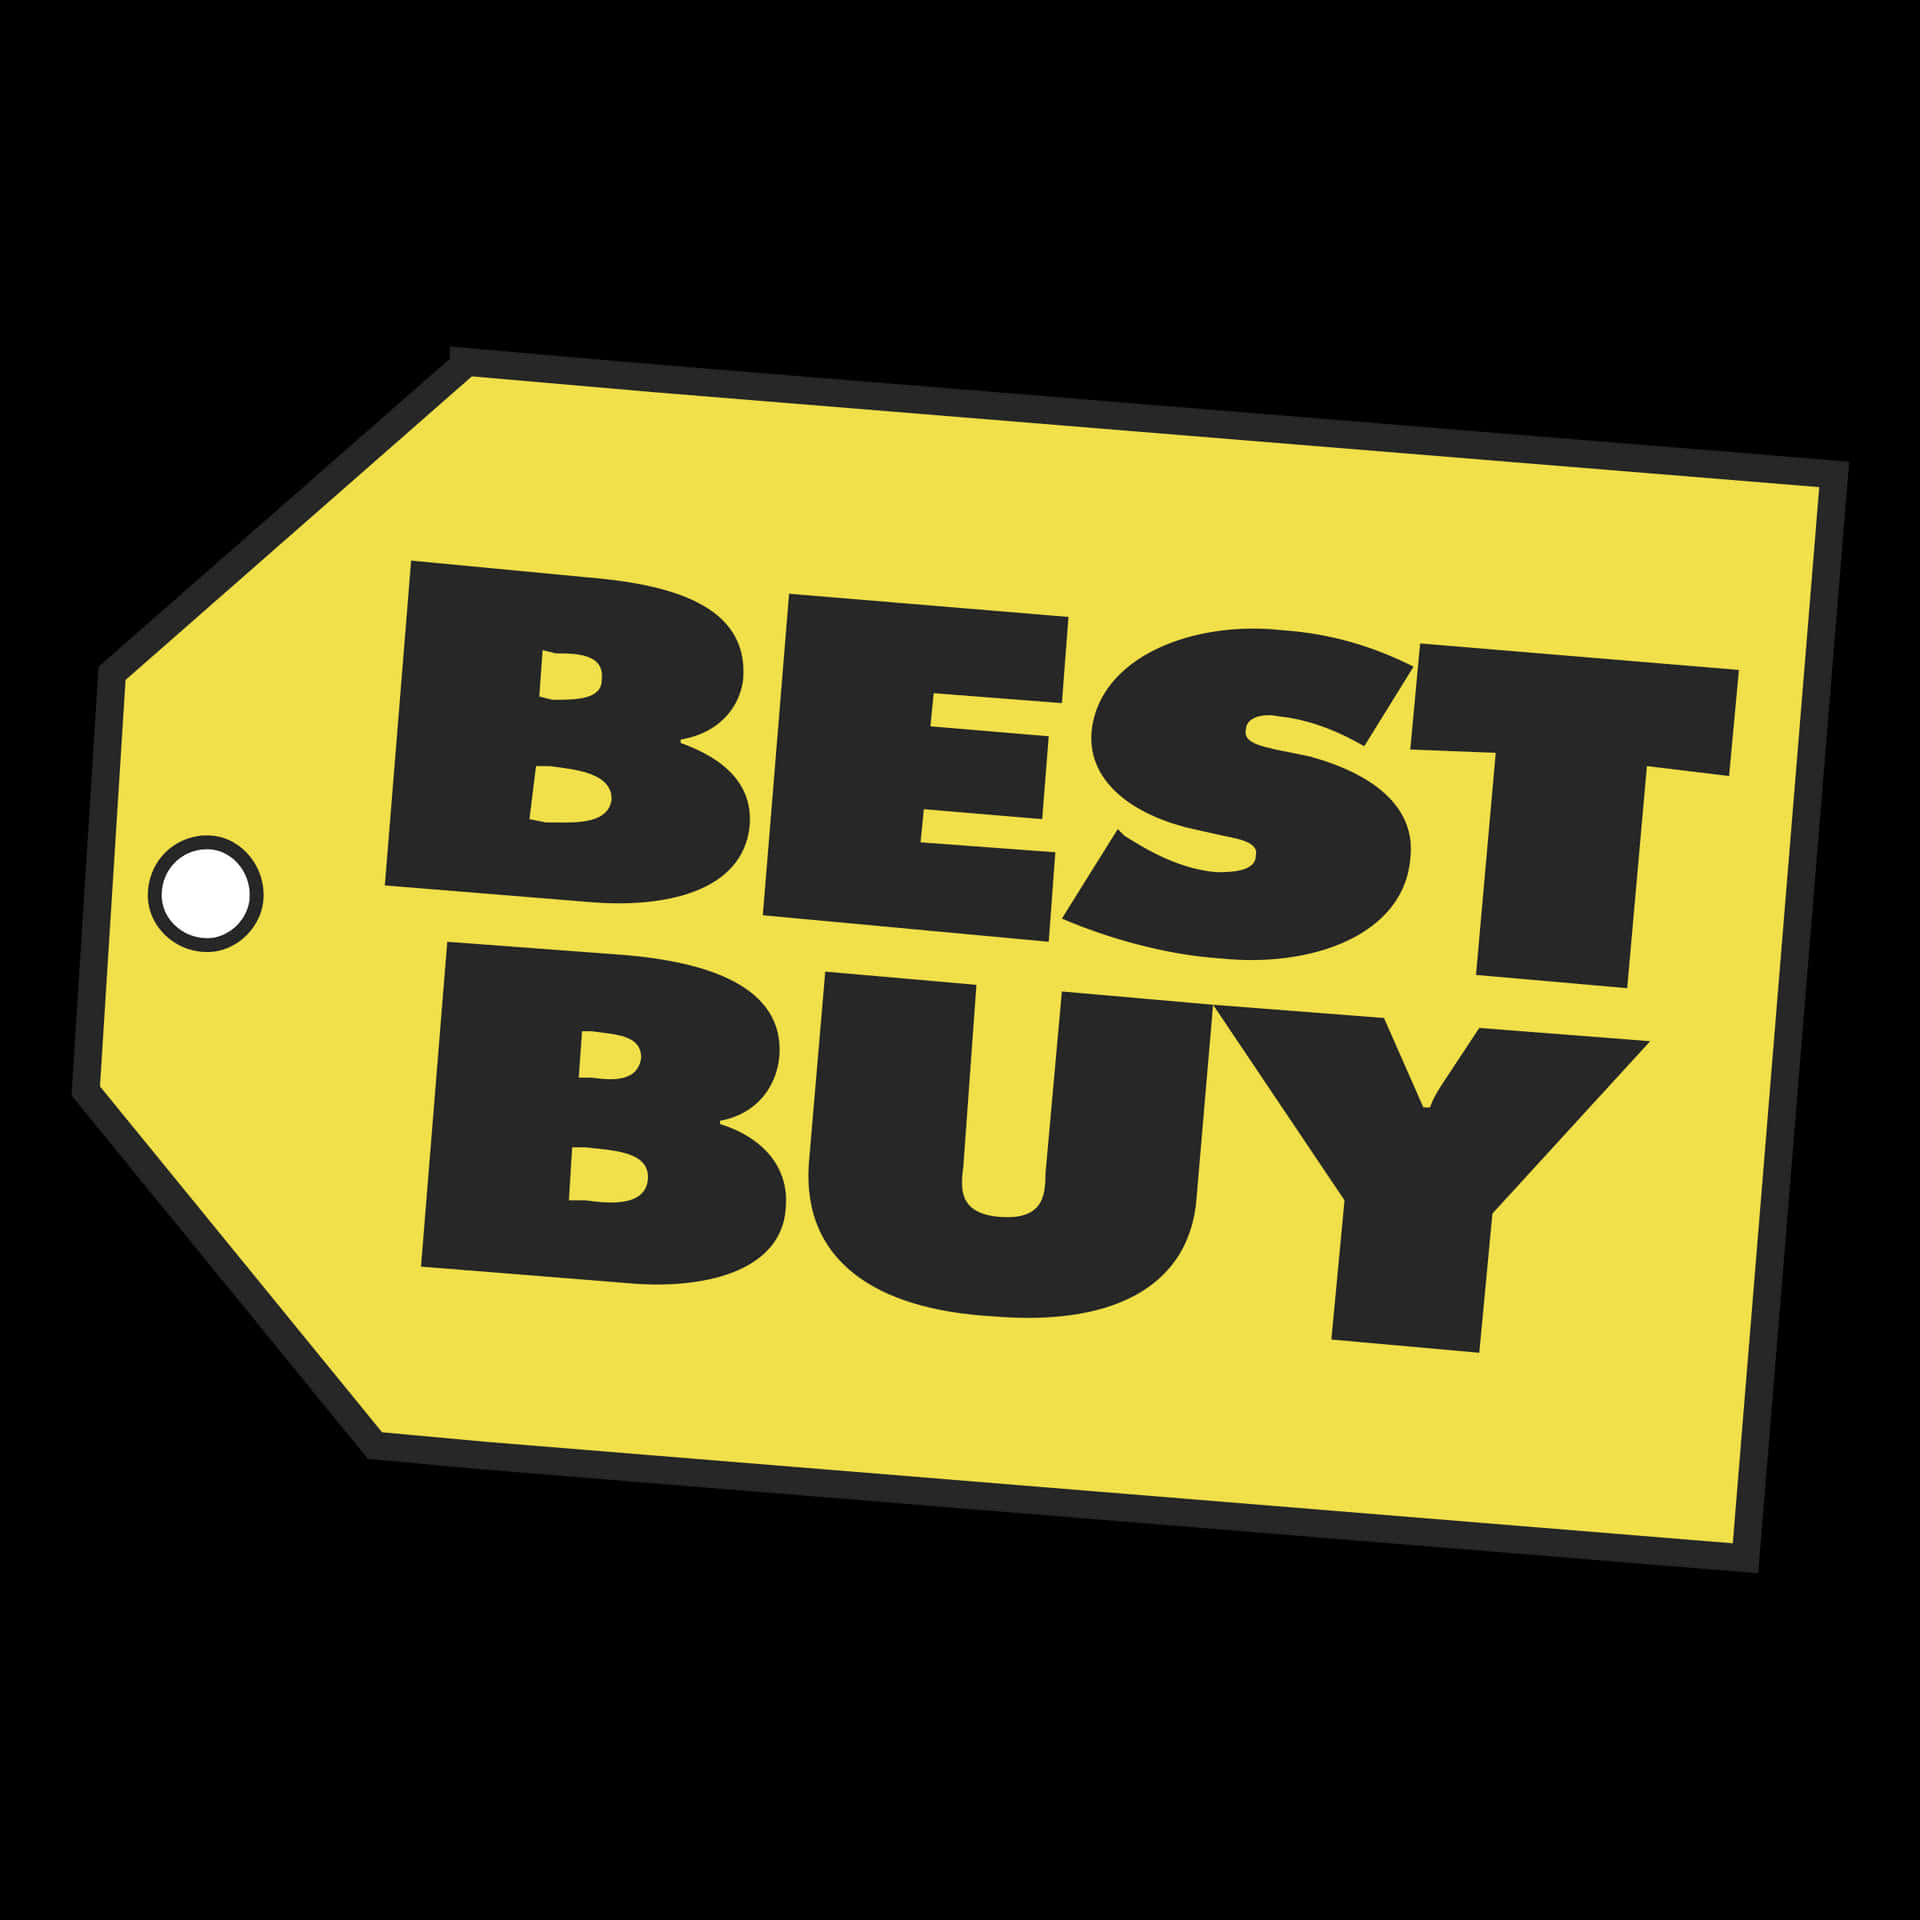 Best Buy Logo On A Black Background